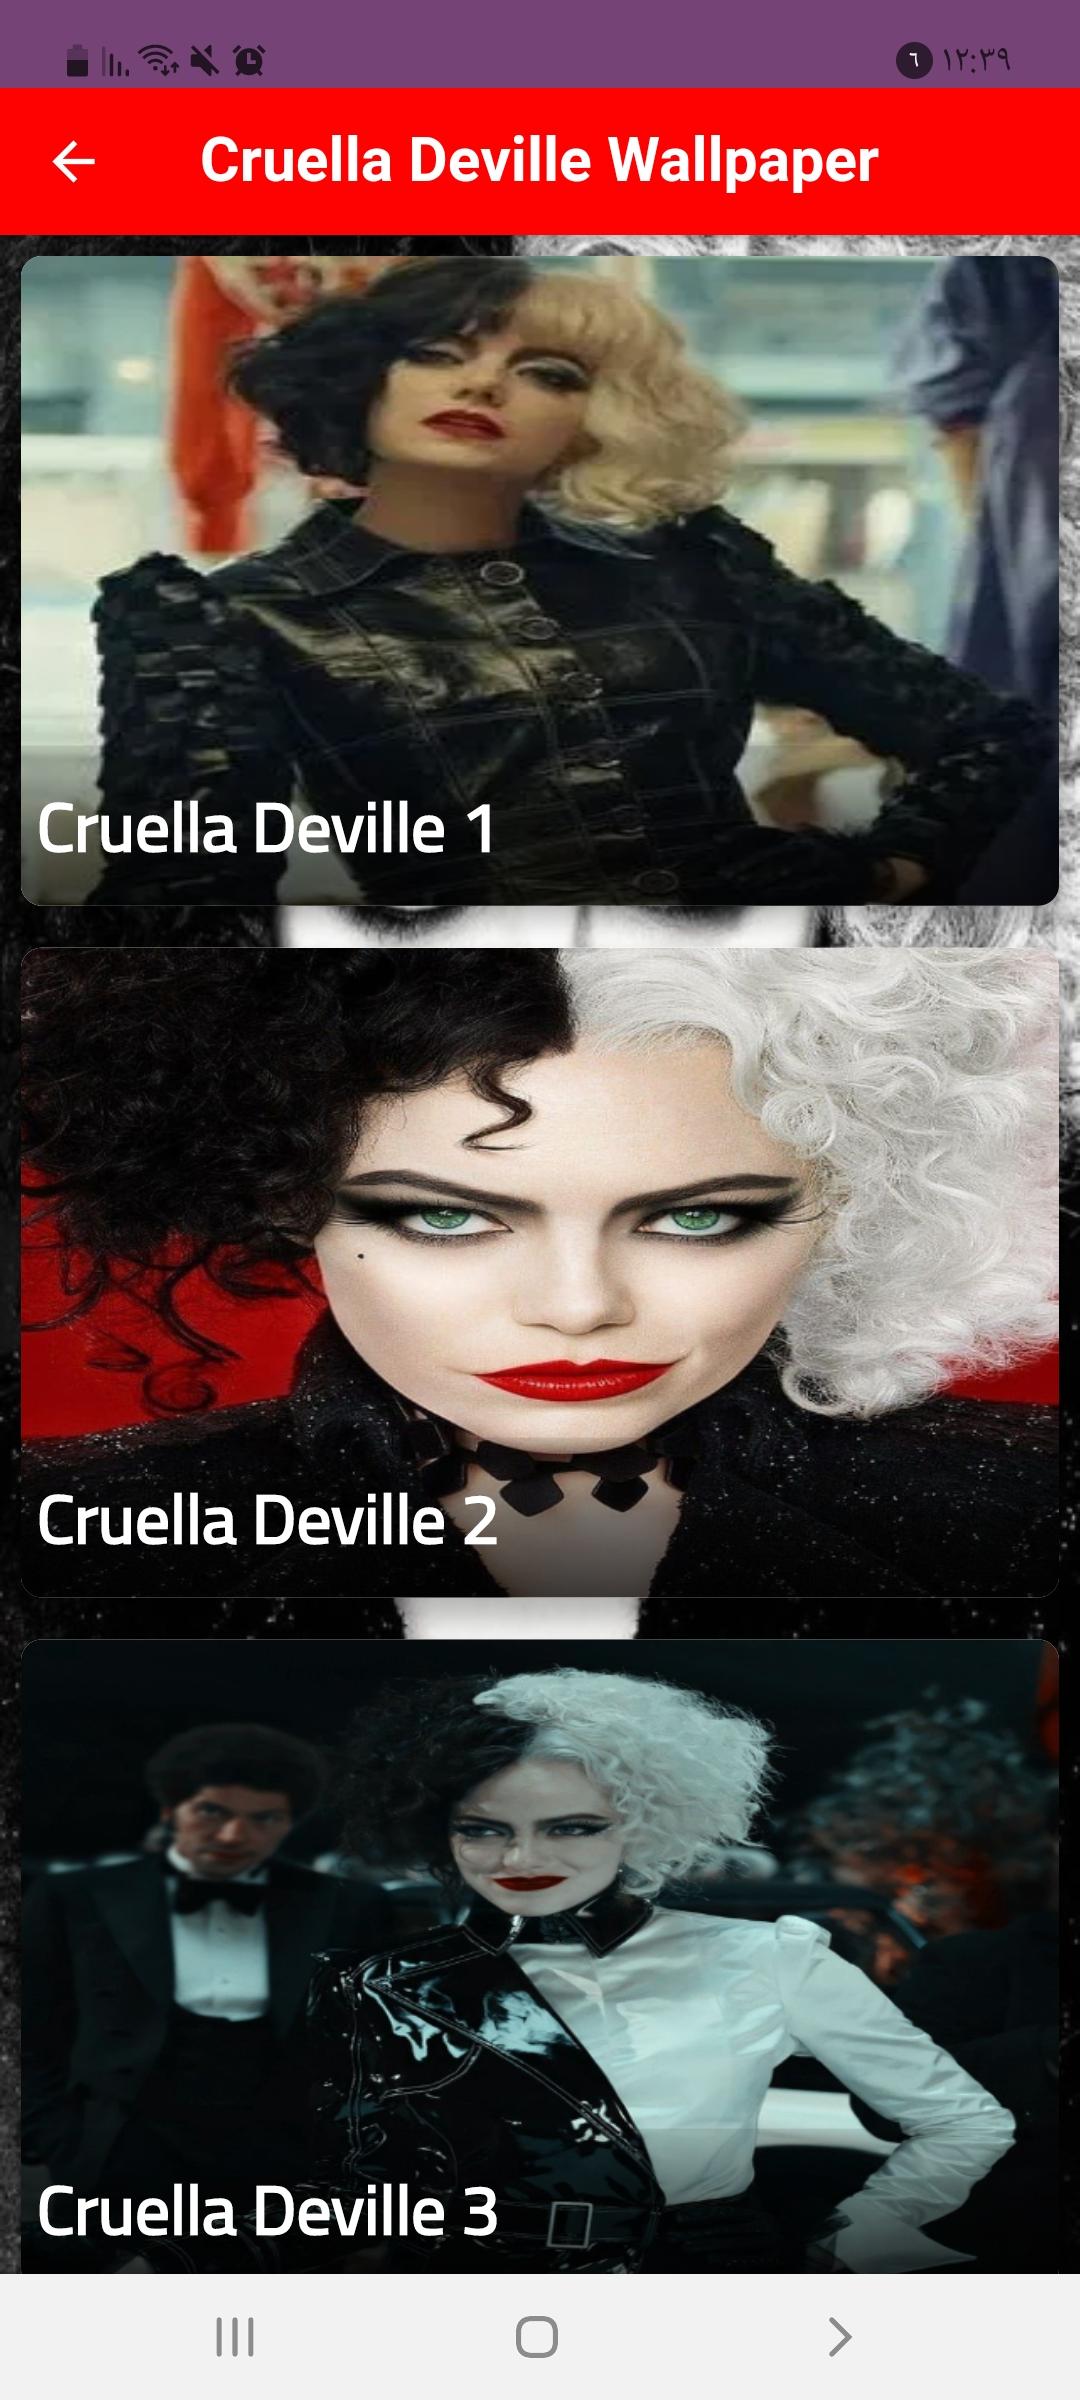 Cruella Deville Wallpaper 3 Screenshot 3